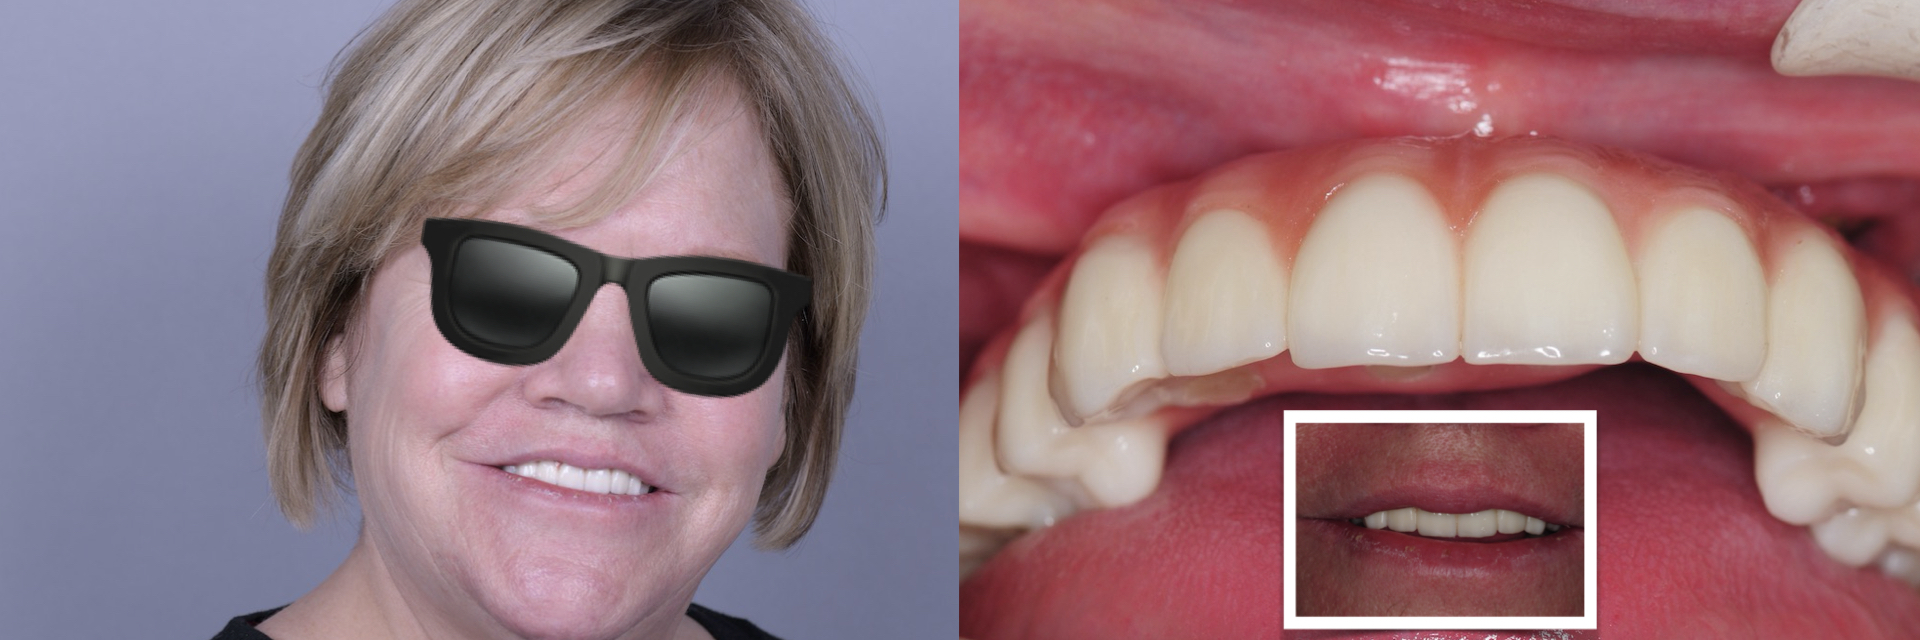 zygomatic-pterygoid-dental-implants-severe-bone-loss-kazemi-oral-surgery-8